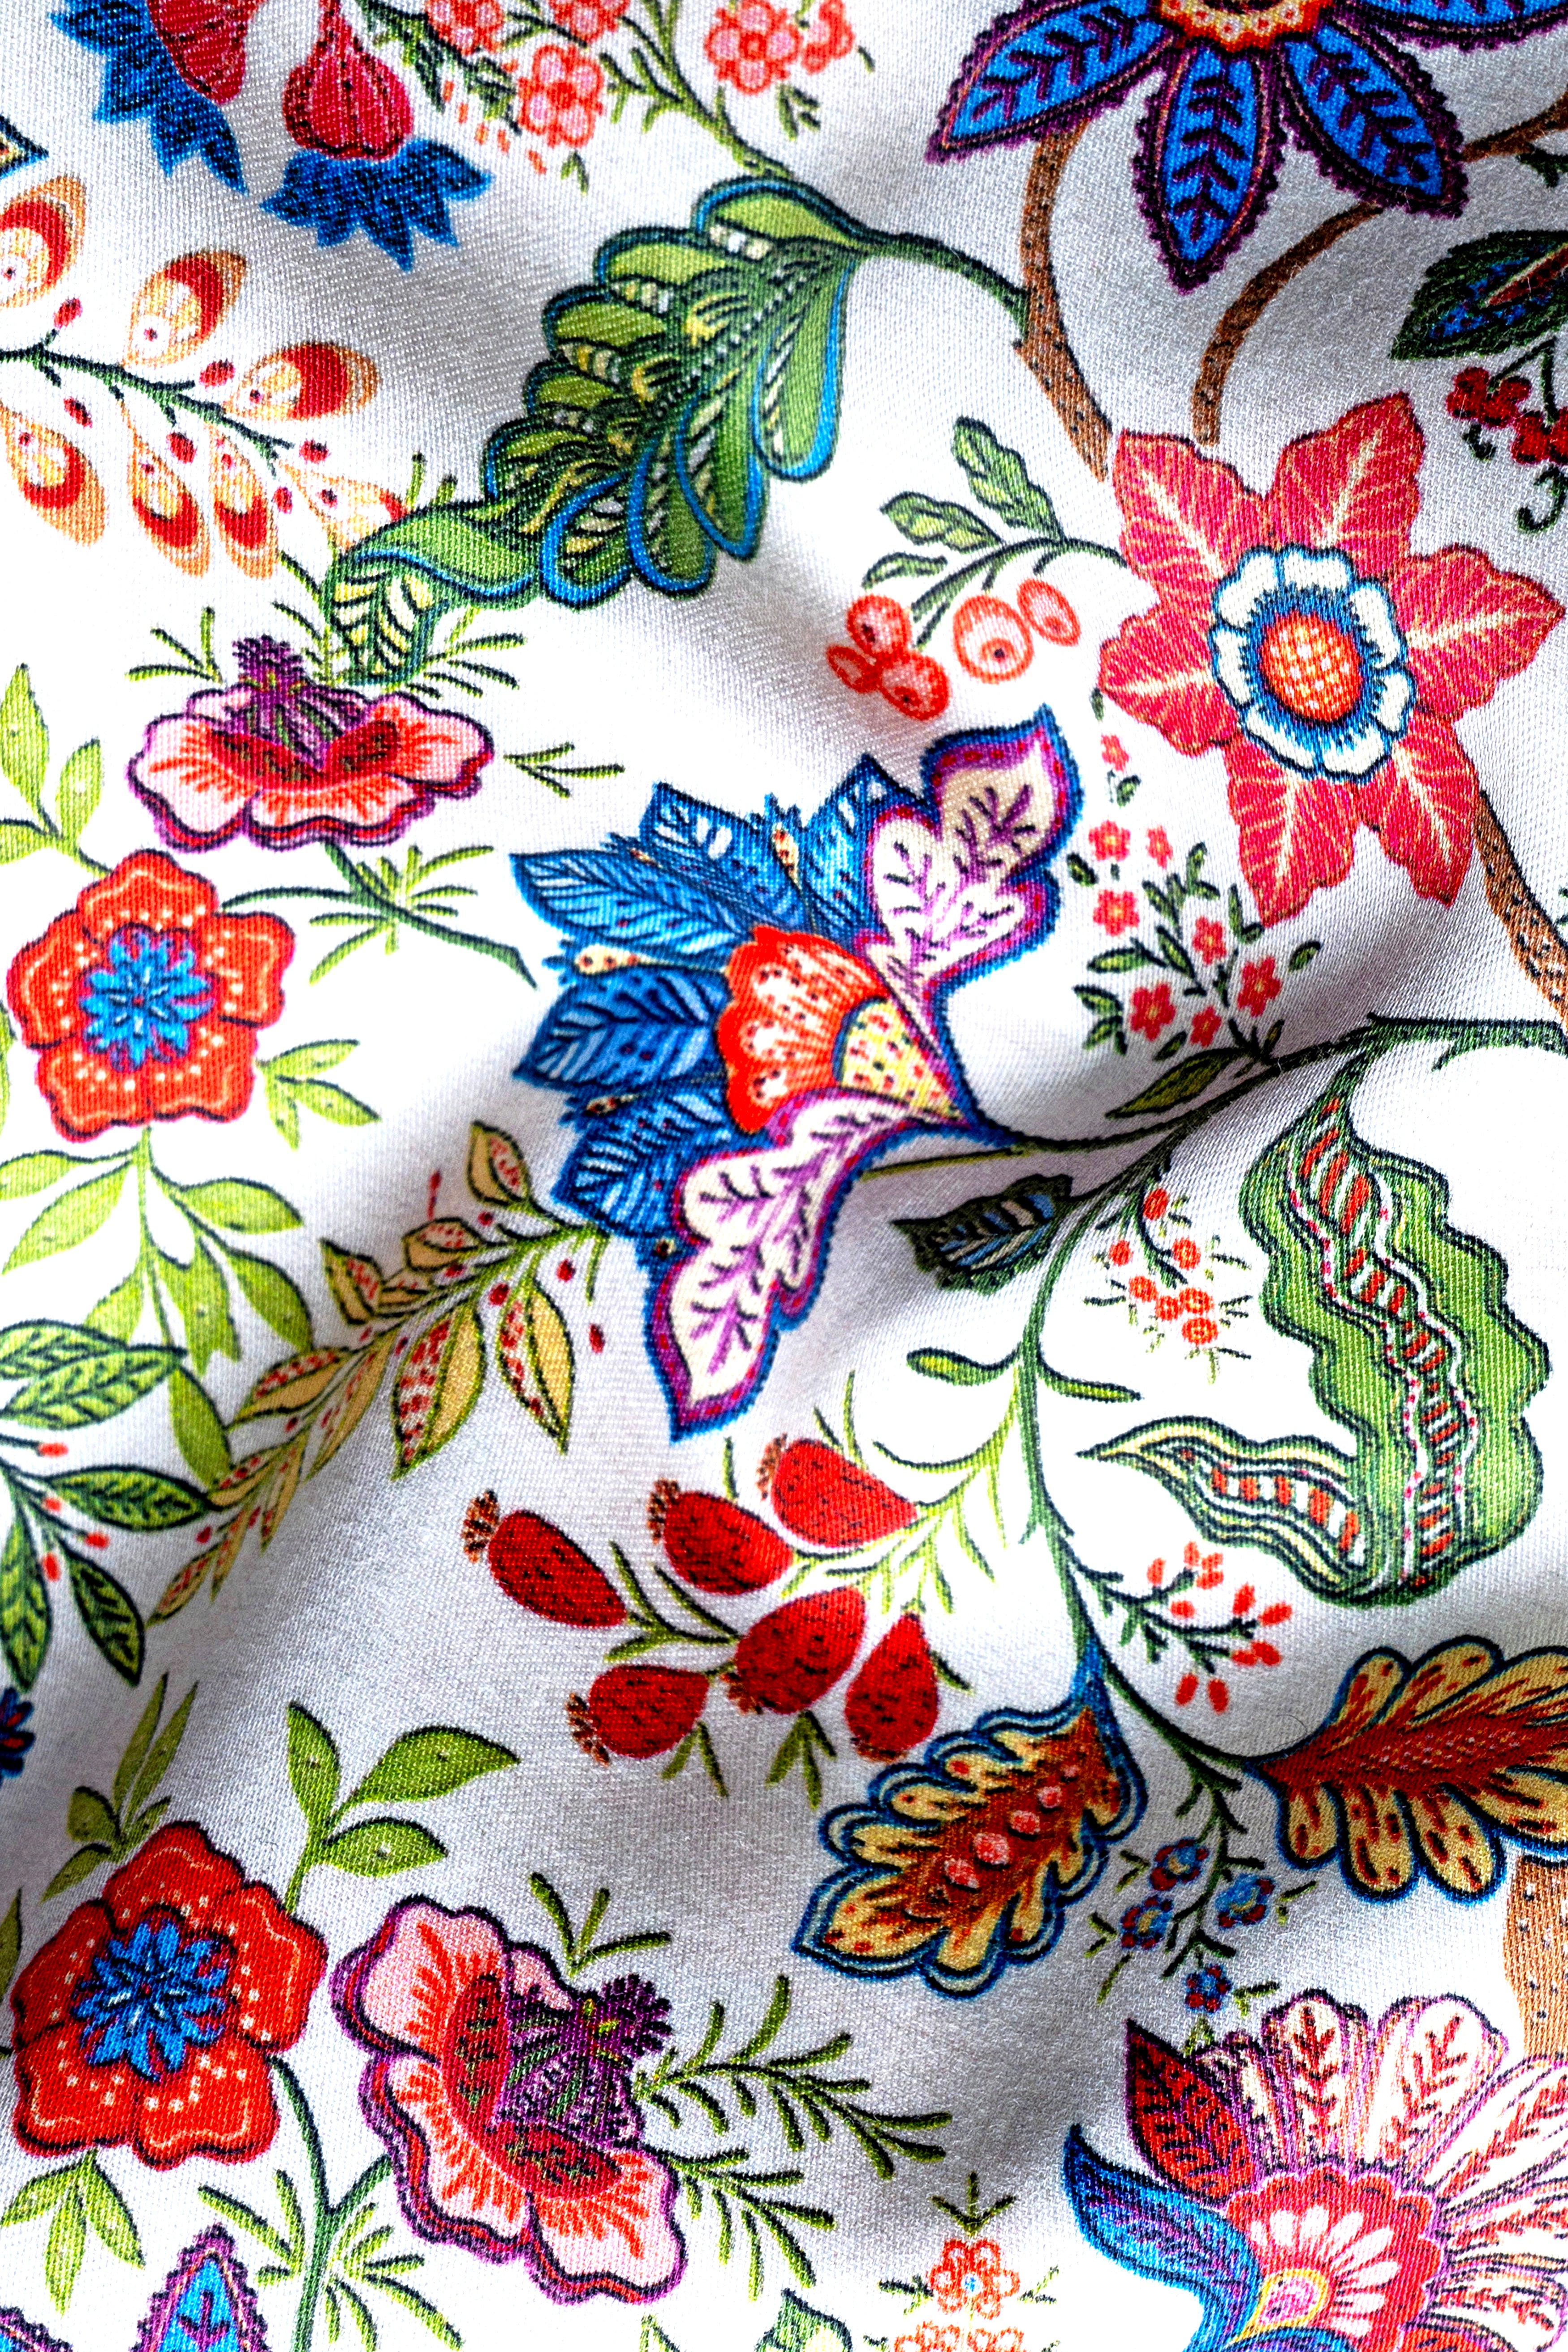 Bright White with Multicolour Flowers Printed Super Soft Premium Cotton Shirt